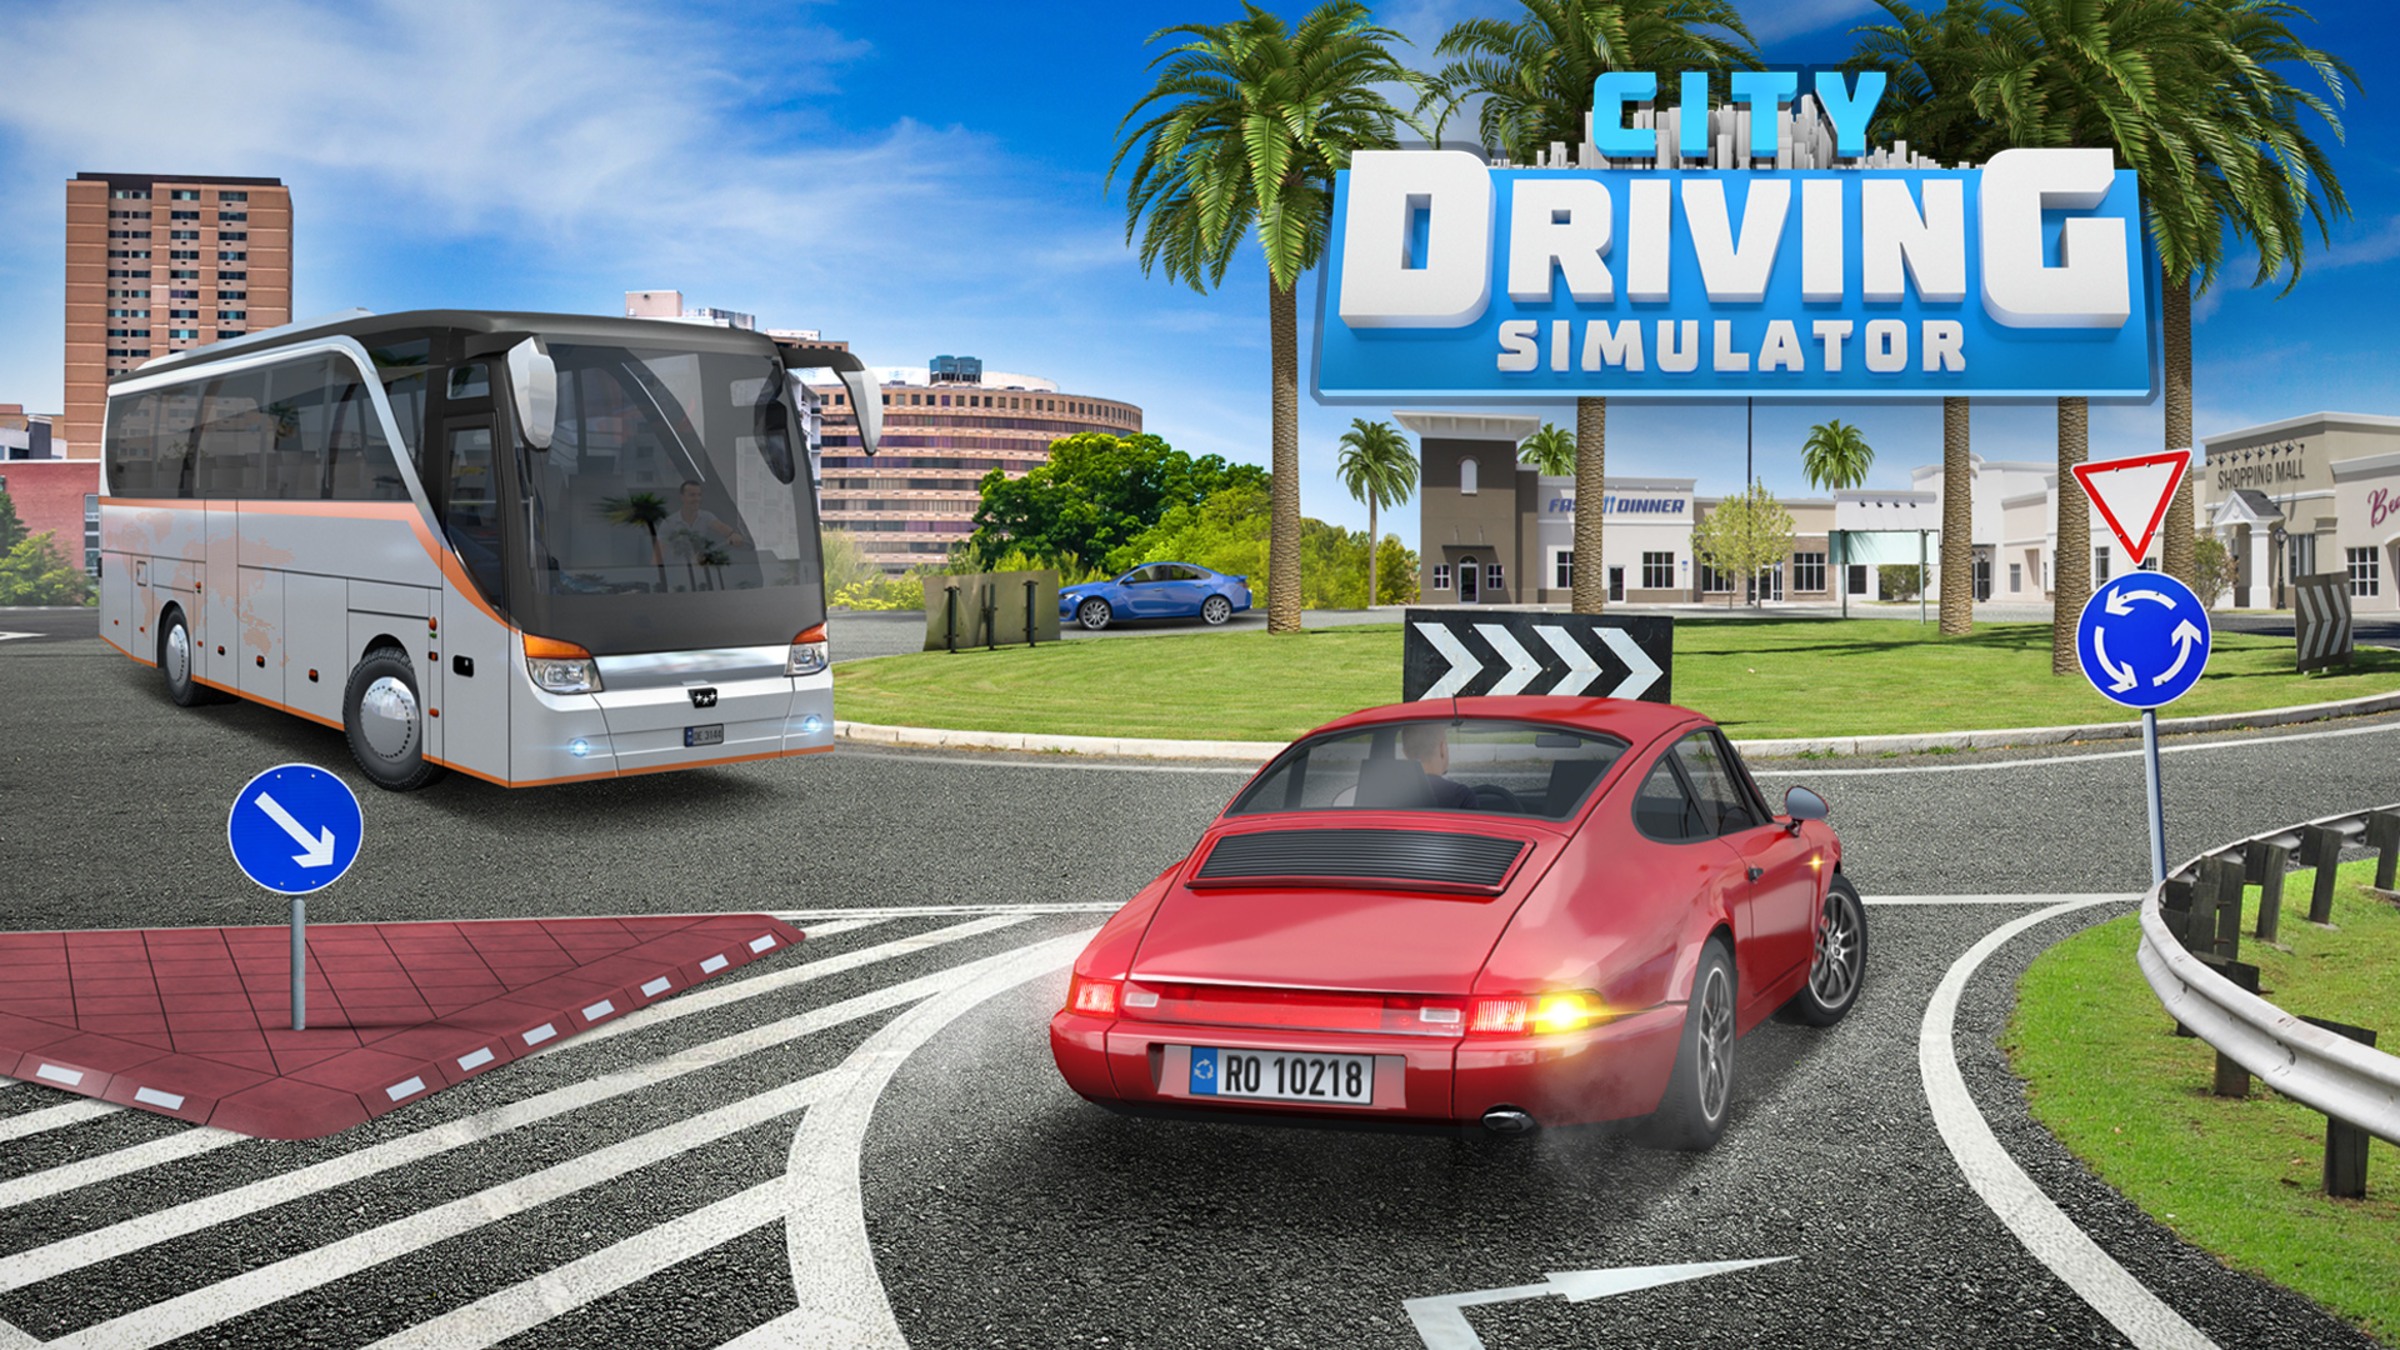 simulation - Good PC car driving simulator? - Super User